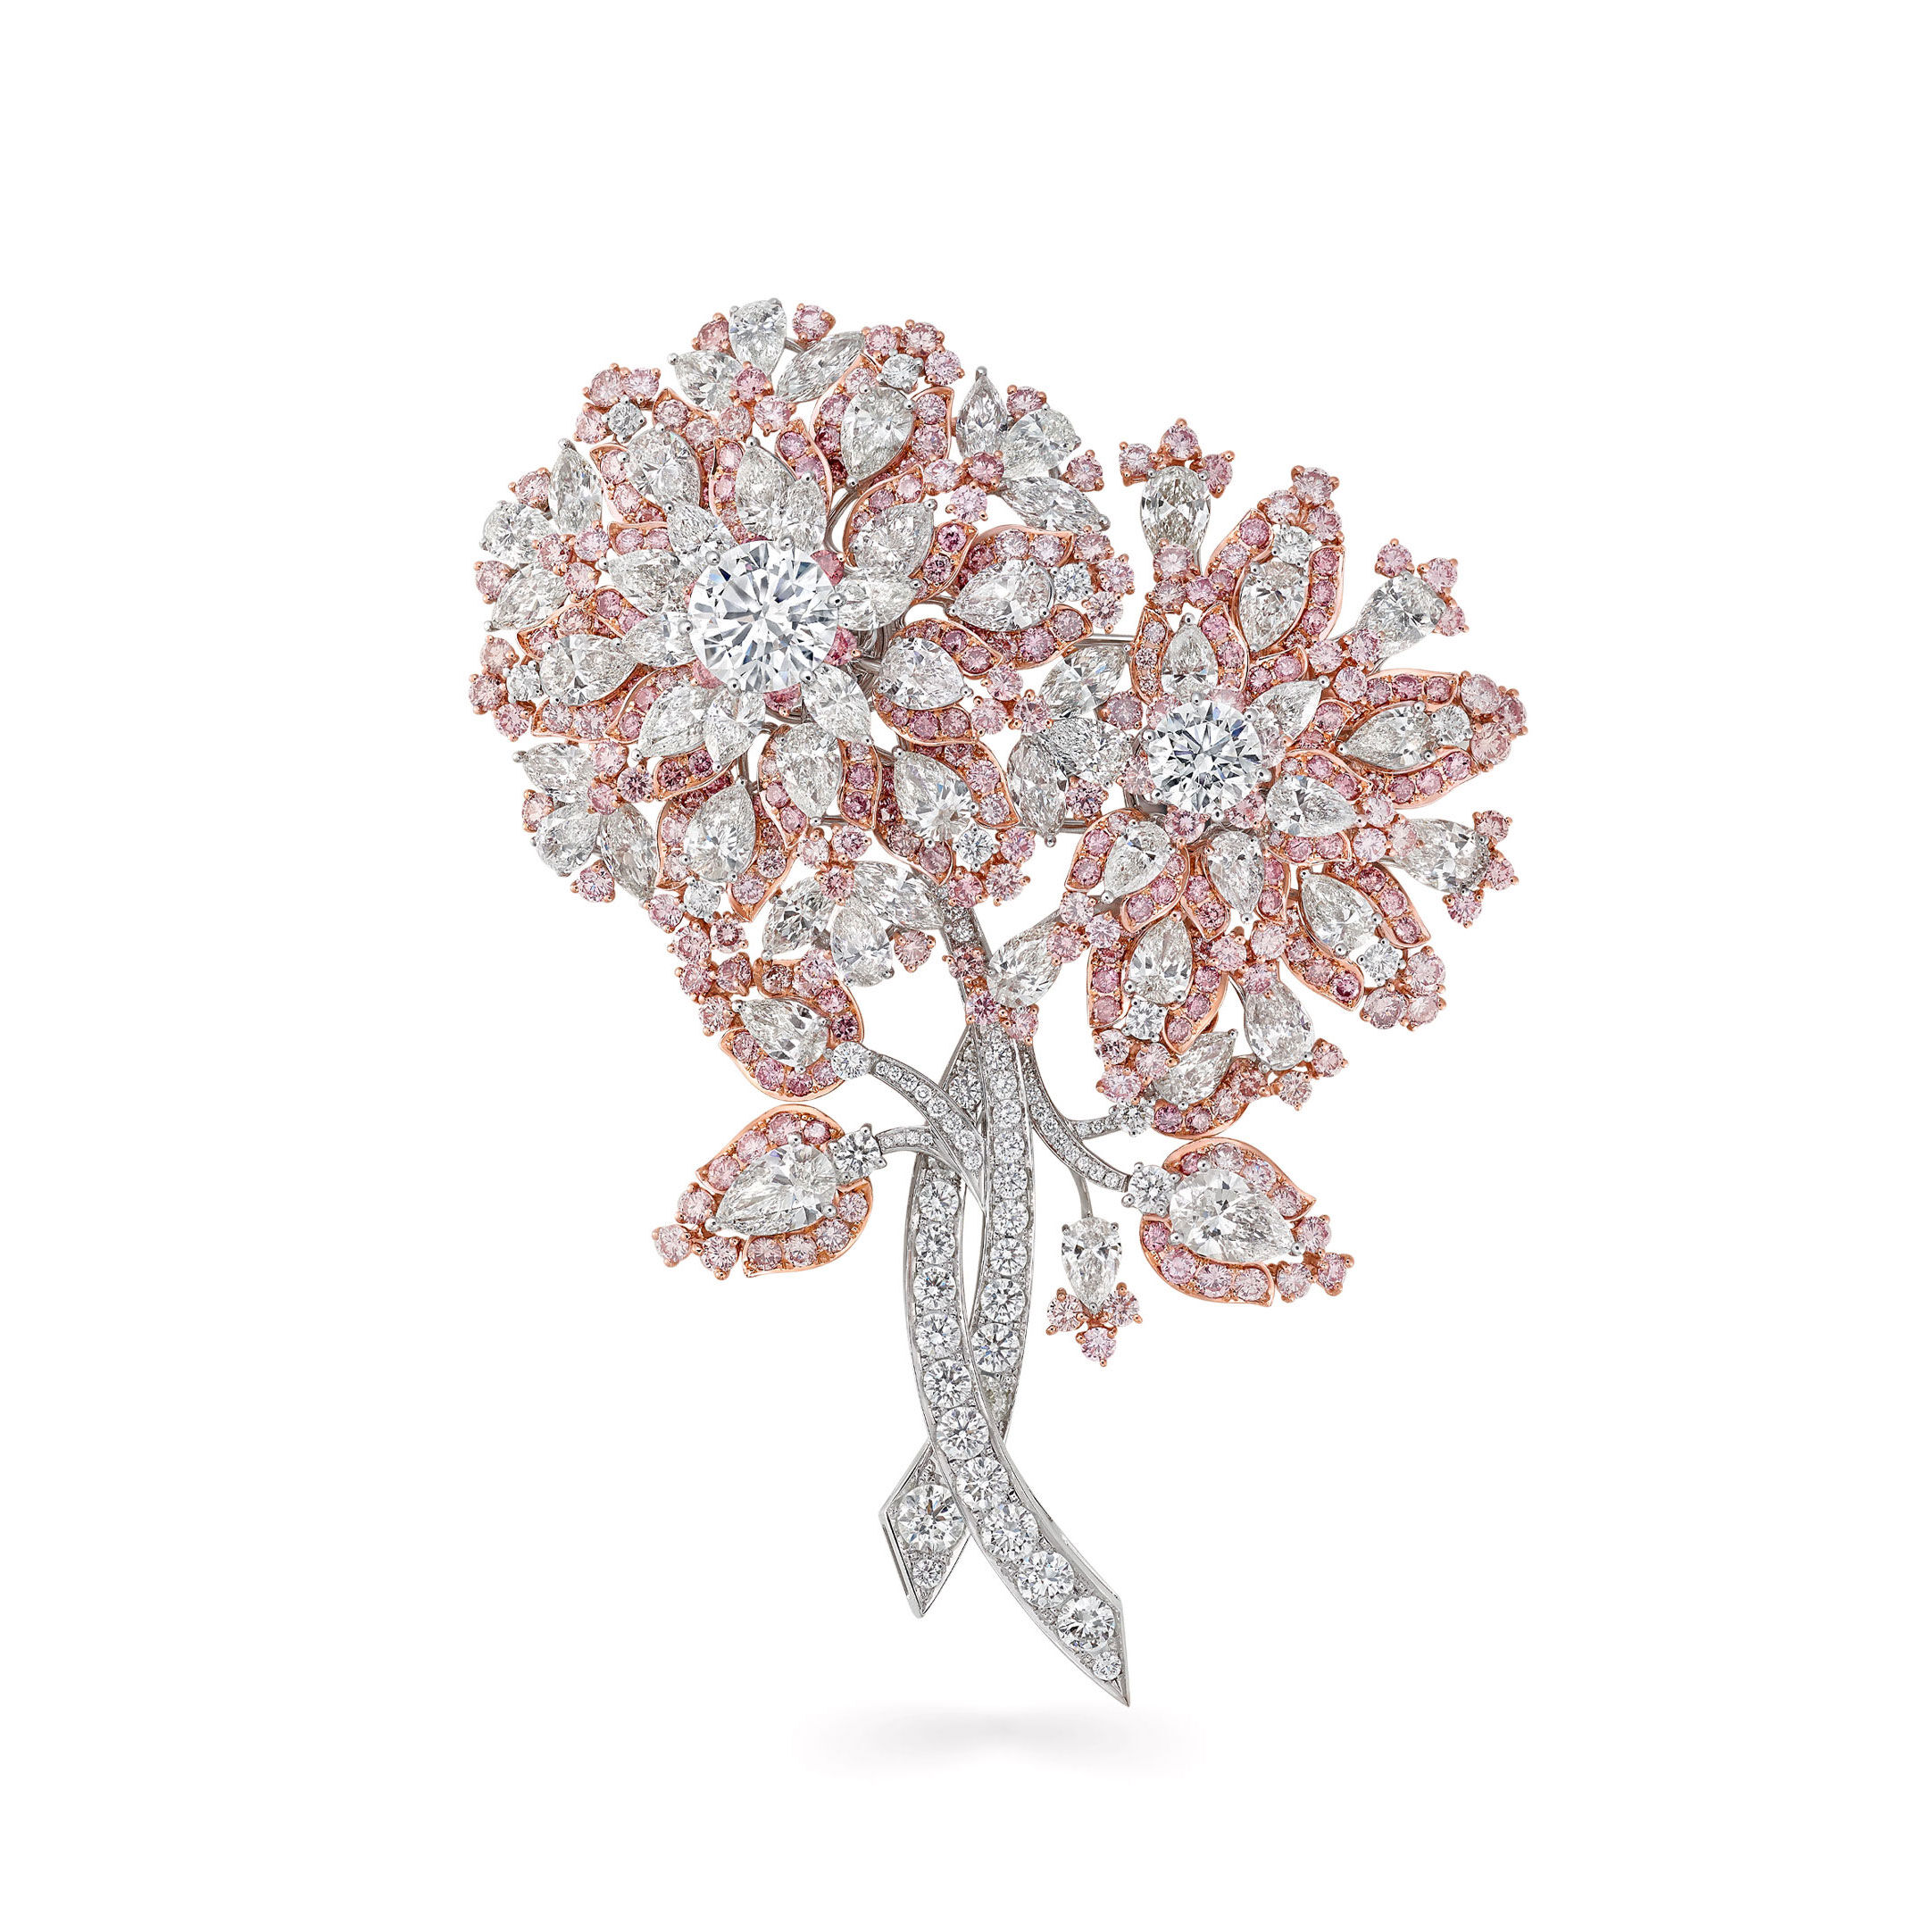 a Graff pink and white diamond high jewellery brooch